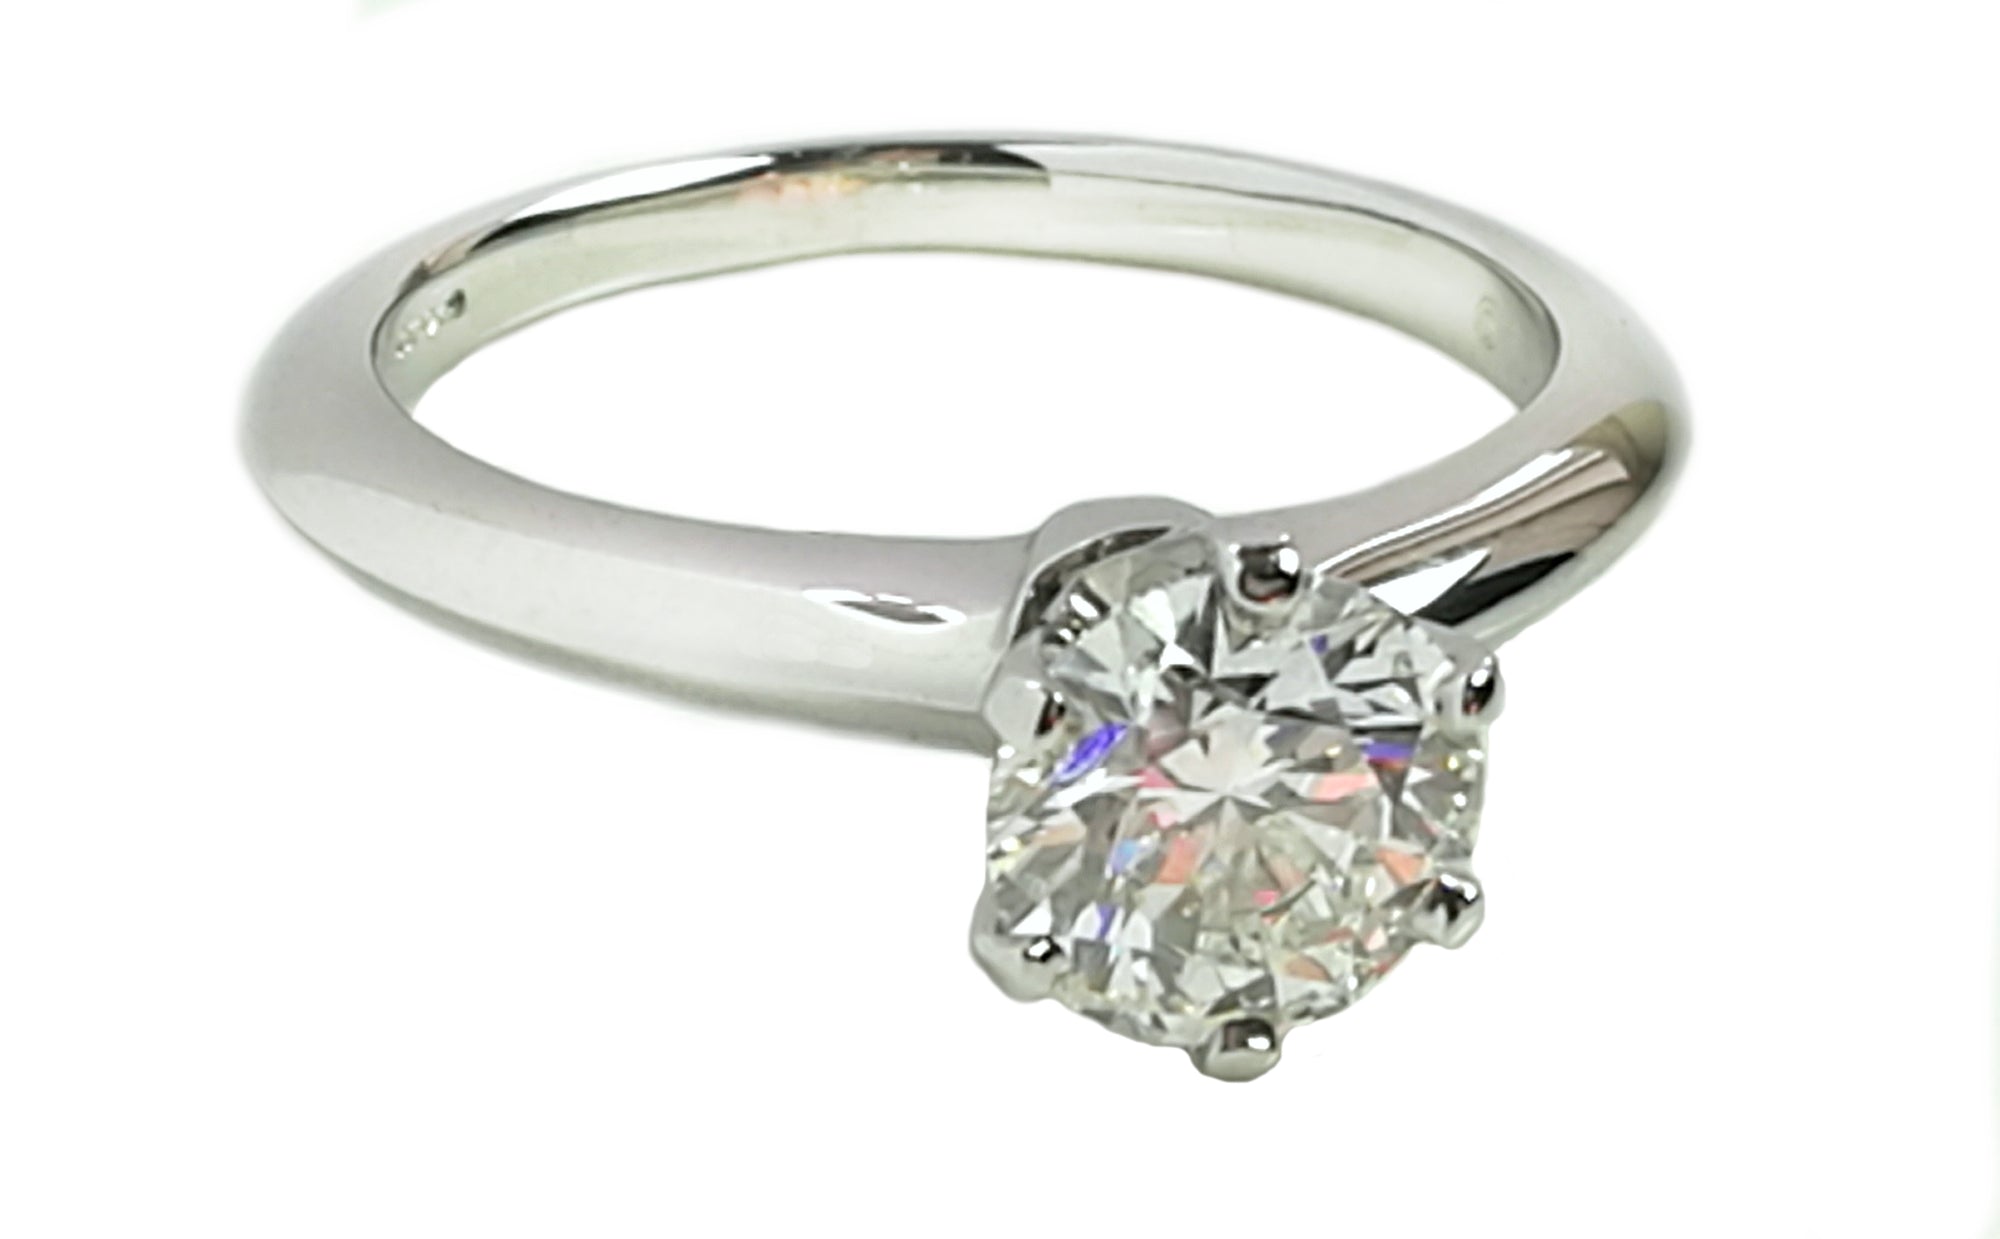 Tiffany & Co. 1.15ct H/VS1 Round Brilliant Cut Diamond Engagement Ring